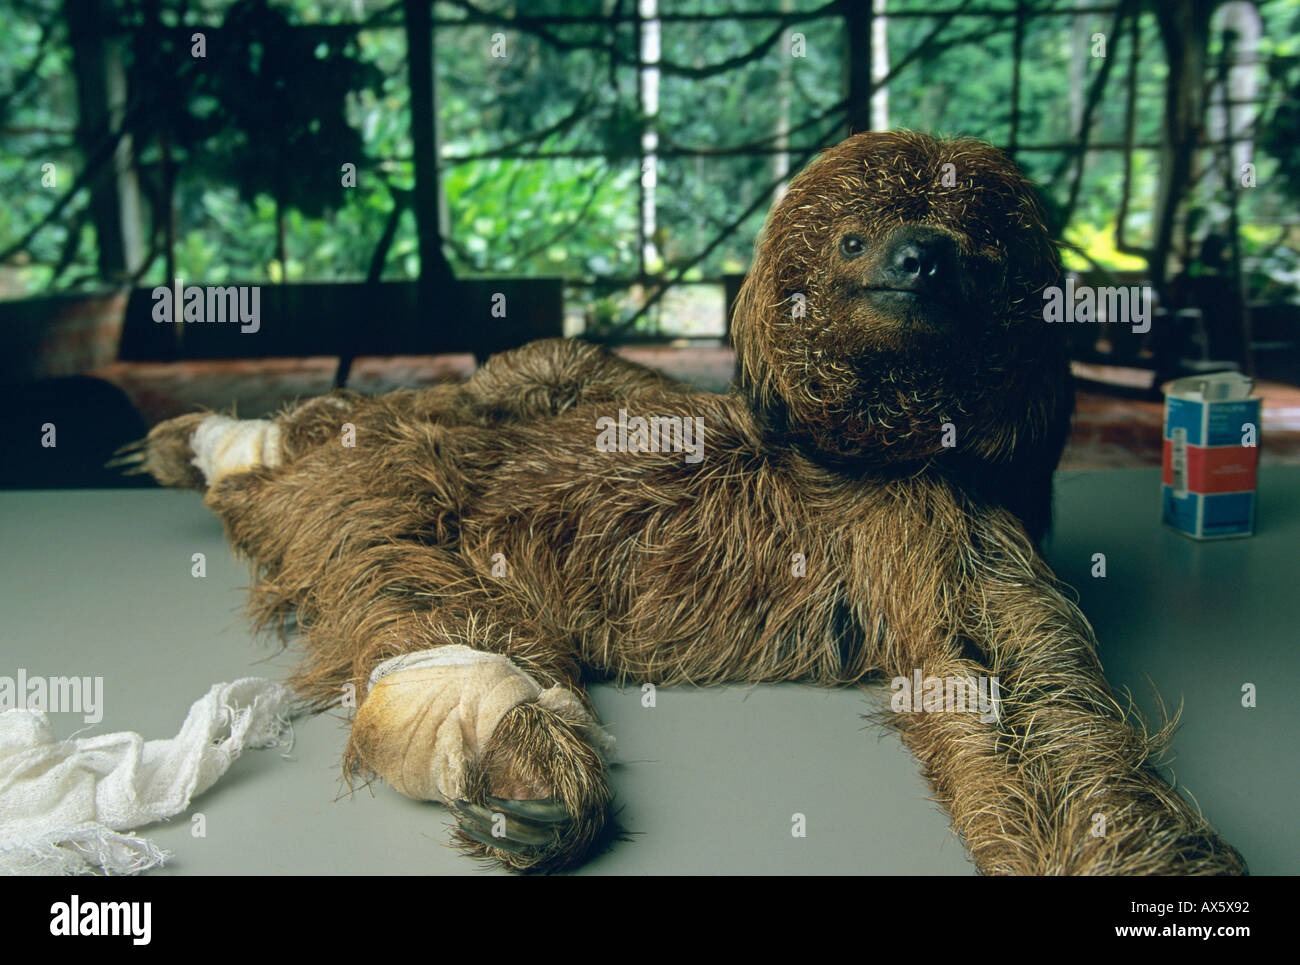 Maned Sloth (Bradypus torquatus) Endangered, receiving medical care, Ai Project rehab center, Bahia State, Brazil Stock Photo